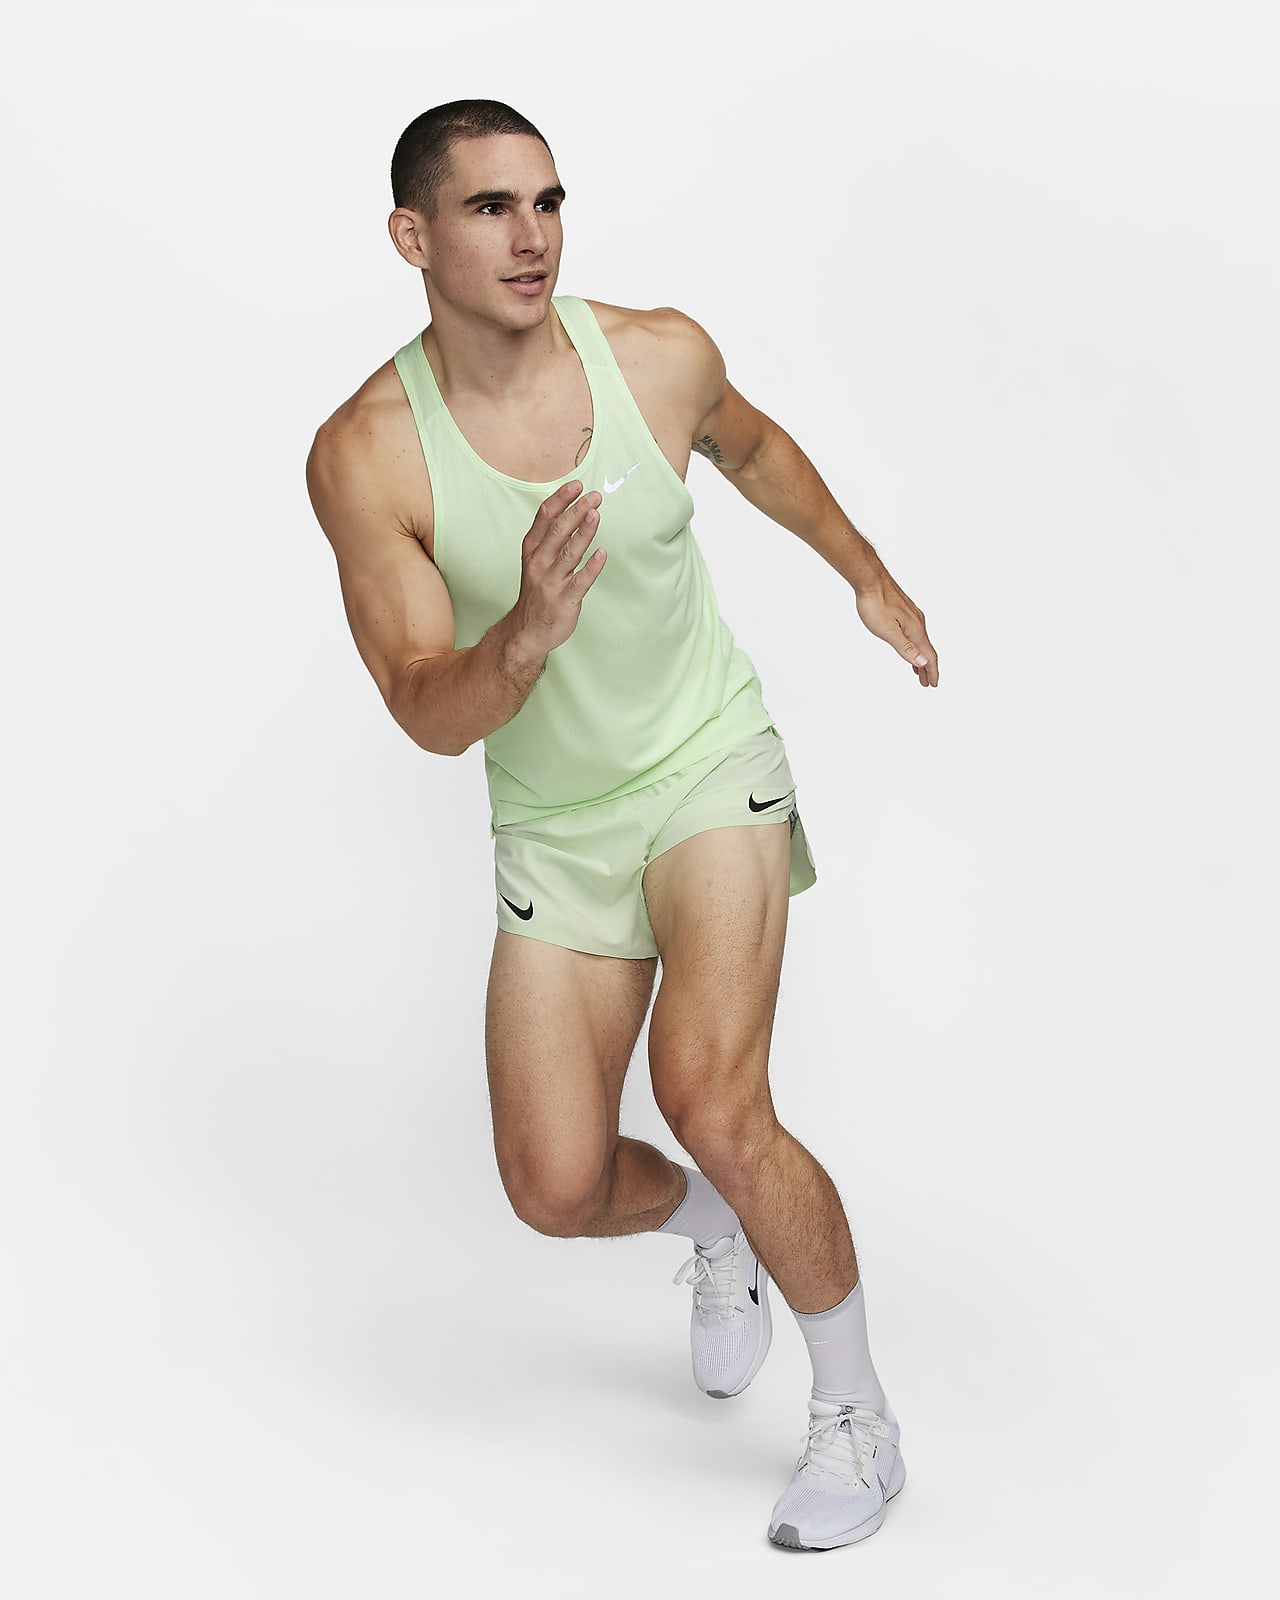 Tank top Nike AeroSwift Men s Running Singlet